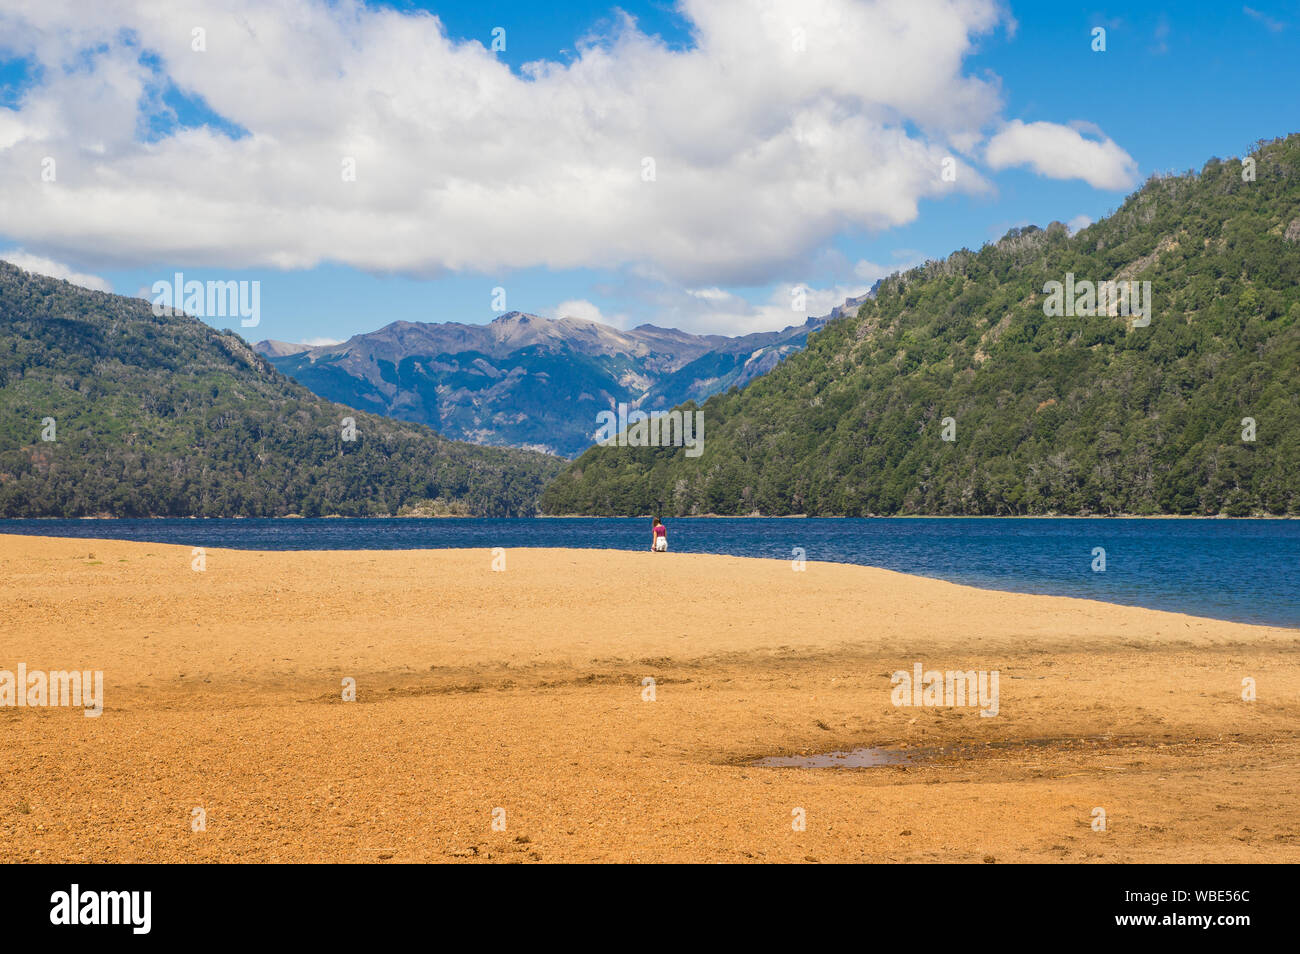 Falkner Lake located in the Nahuel Huapi National Park, province of Neuquen, Argentina Stock Photo